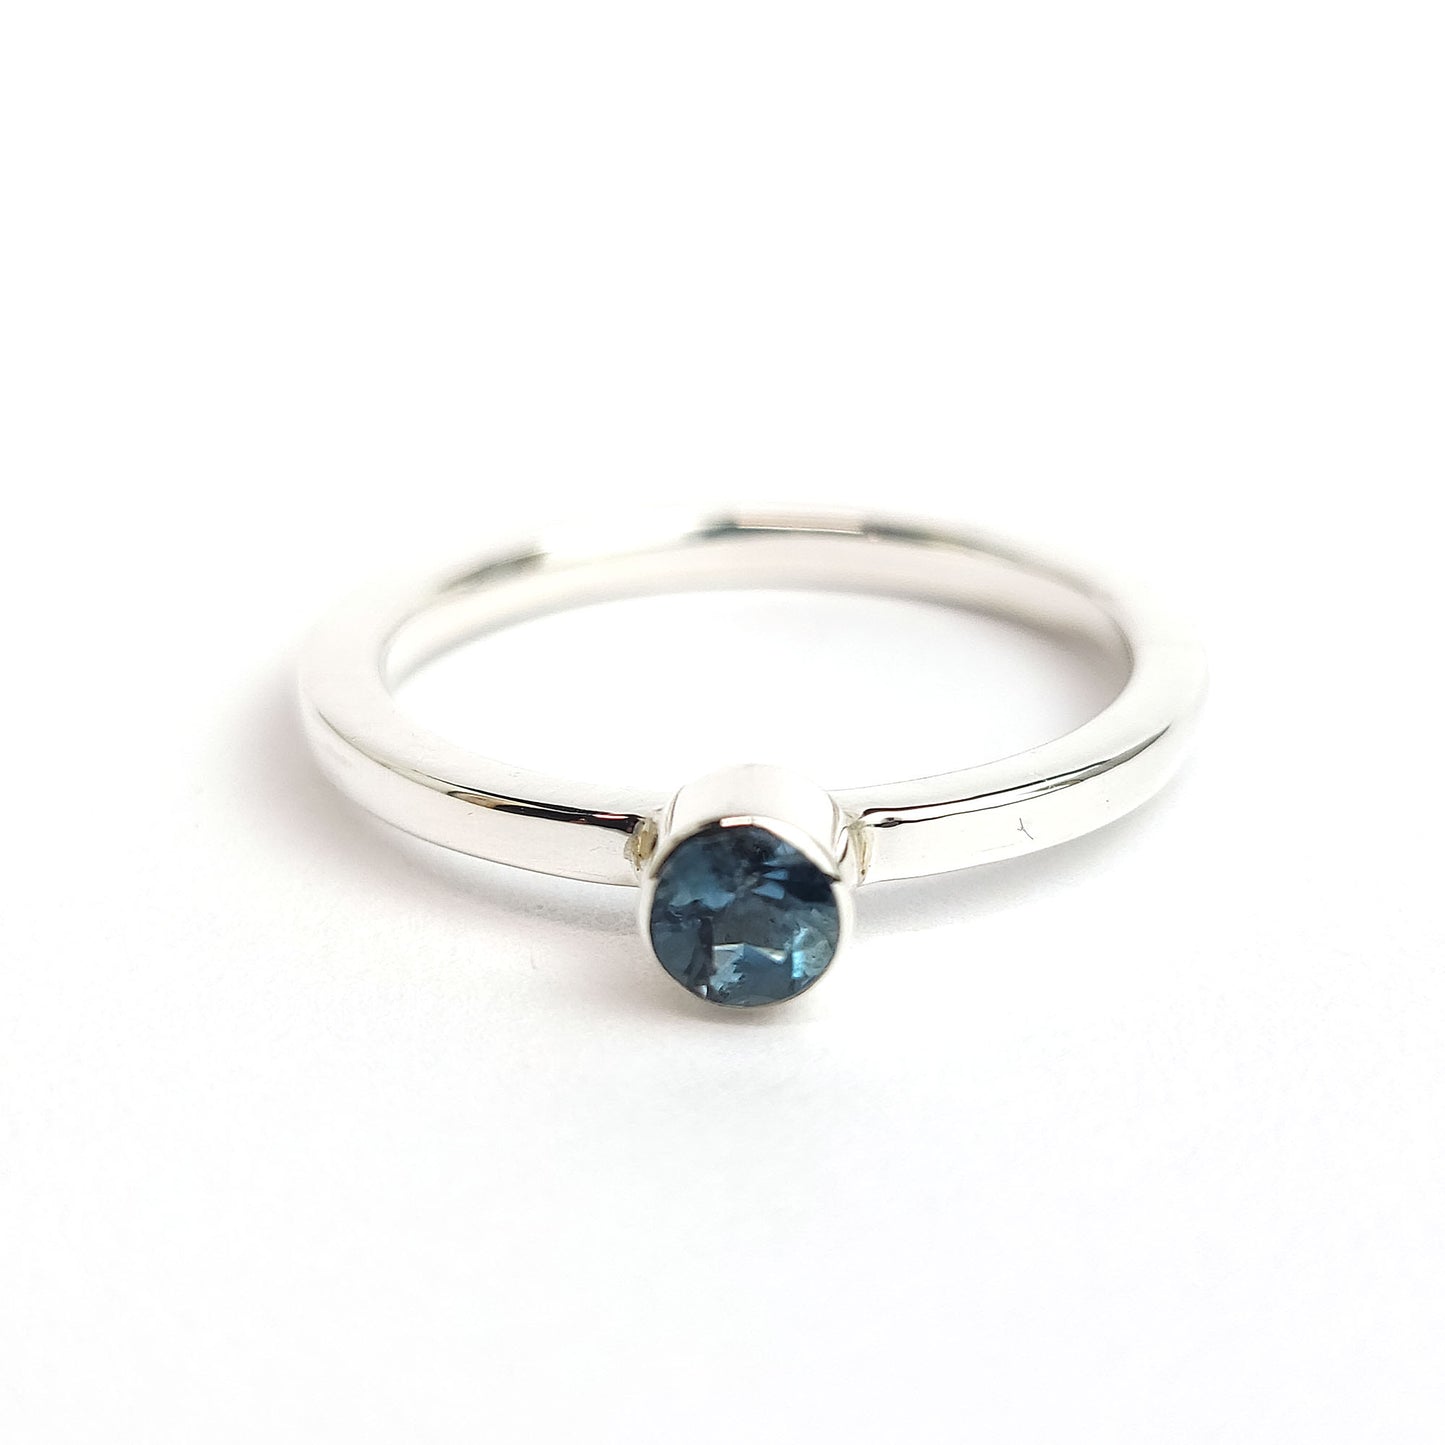 Bezel Sterling Silver Ring - blue tourmaline